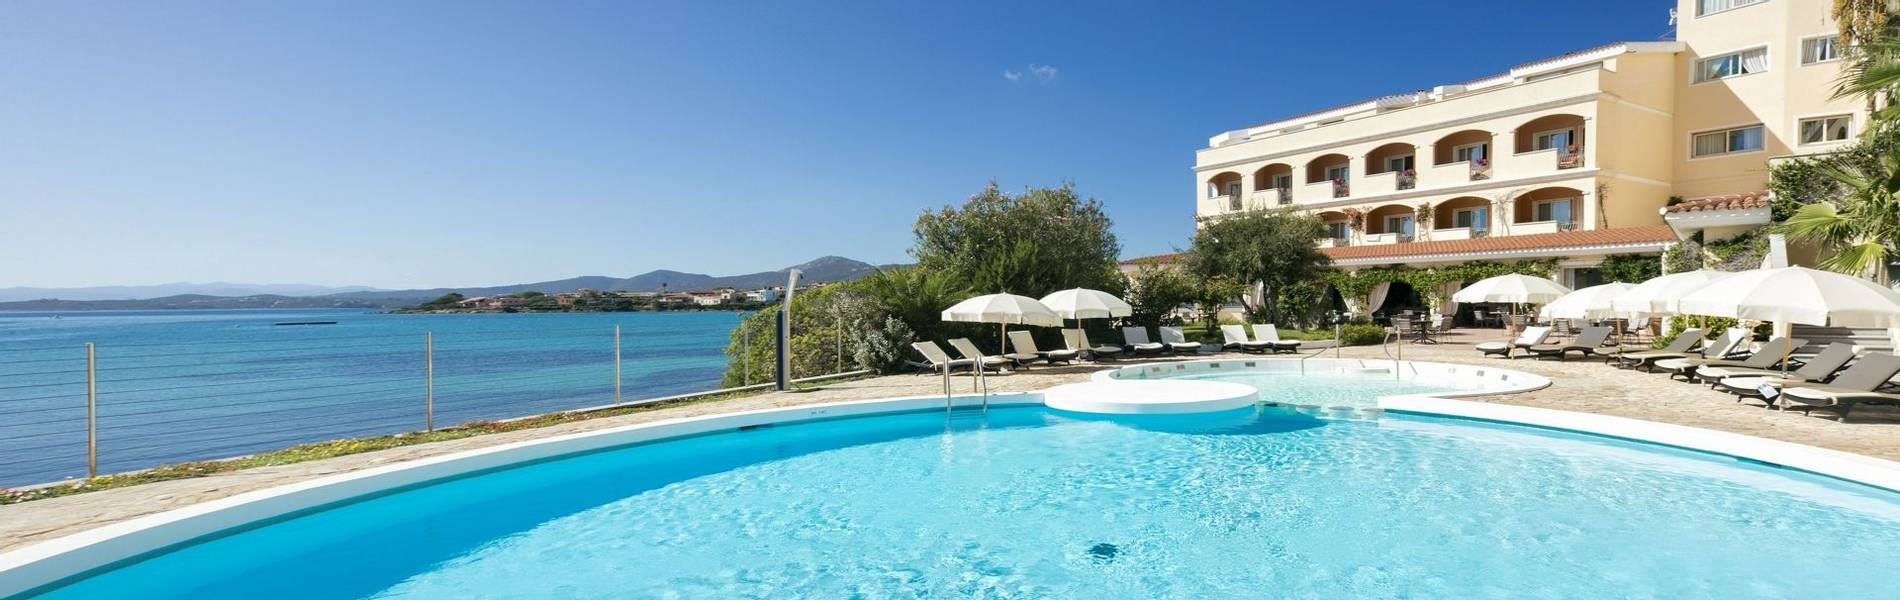 Pool terrace - Gabbiano Azzurro Hotel _ Suites - stampa1.jpg